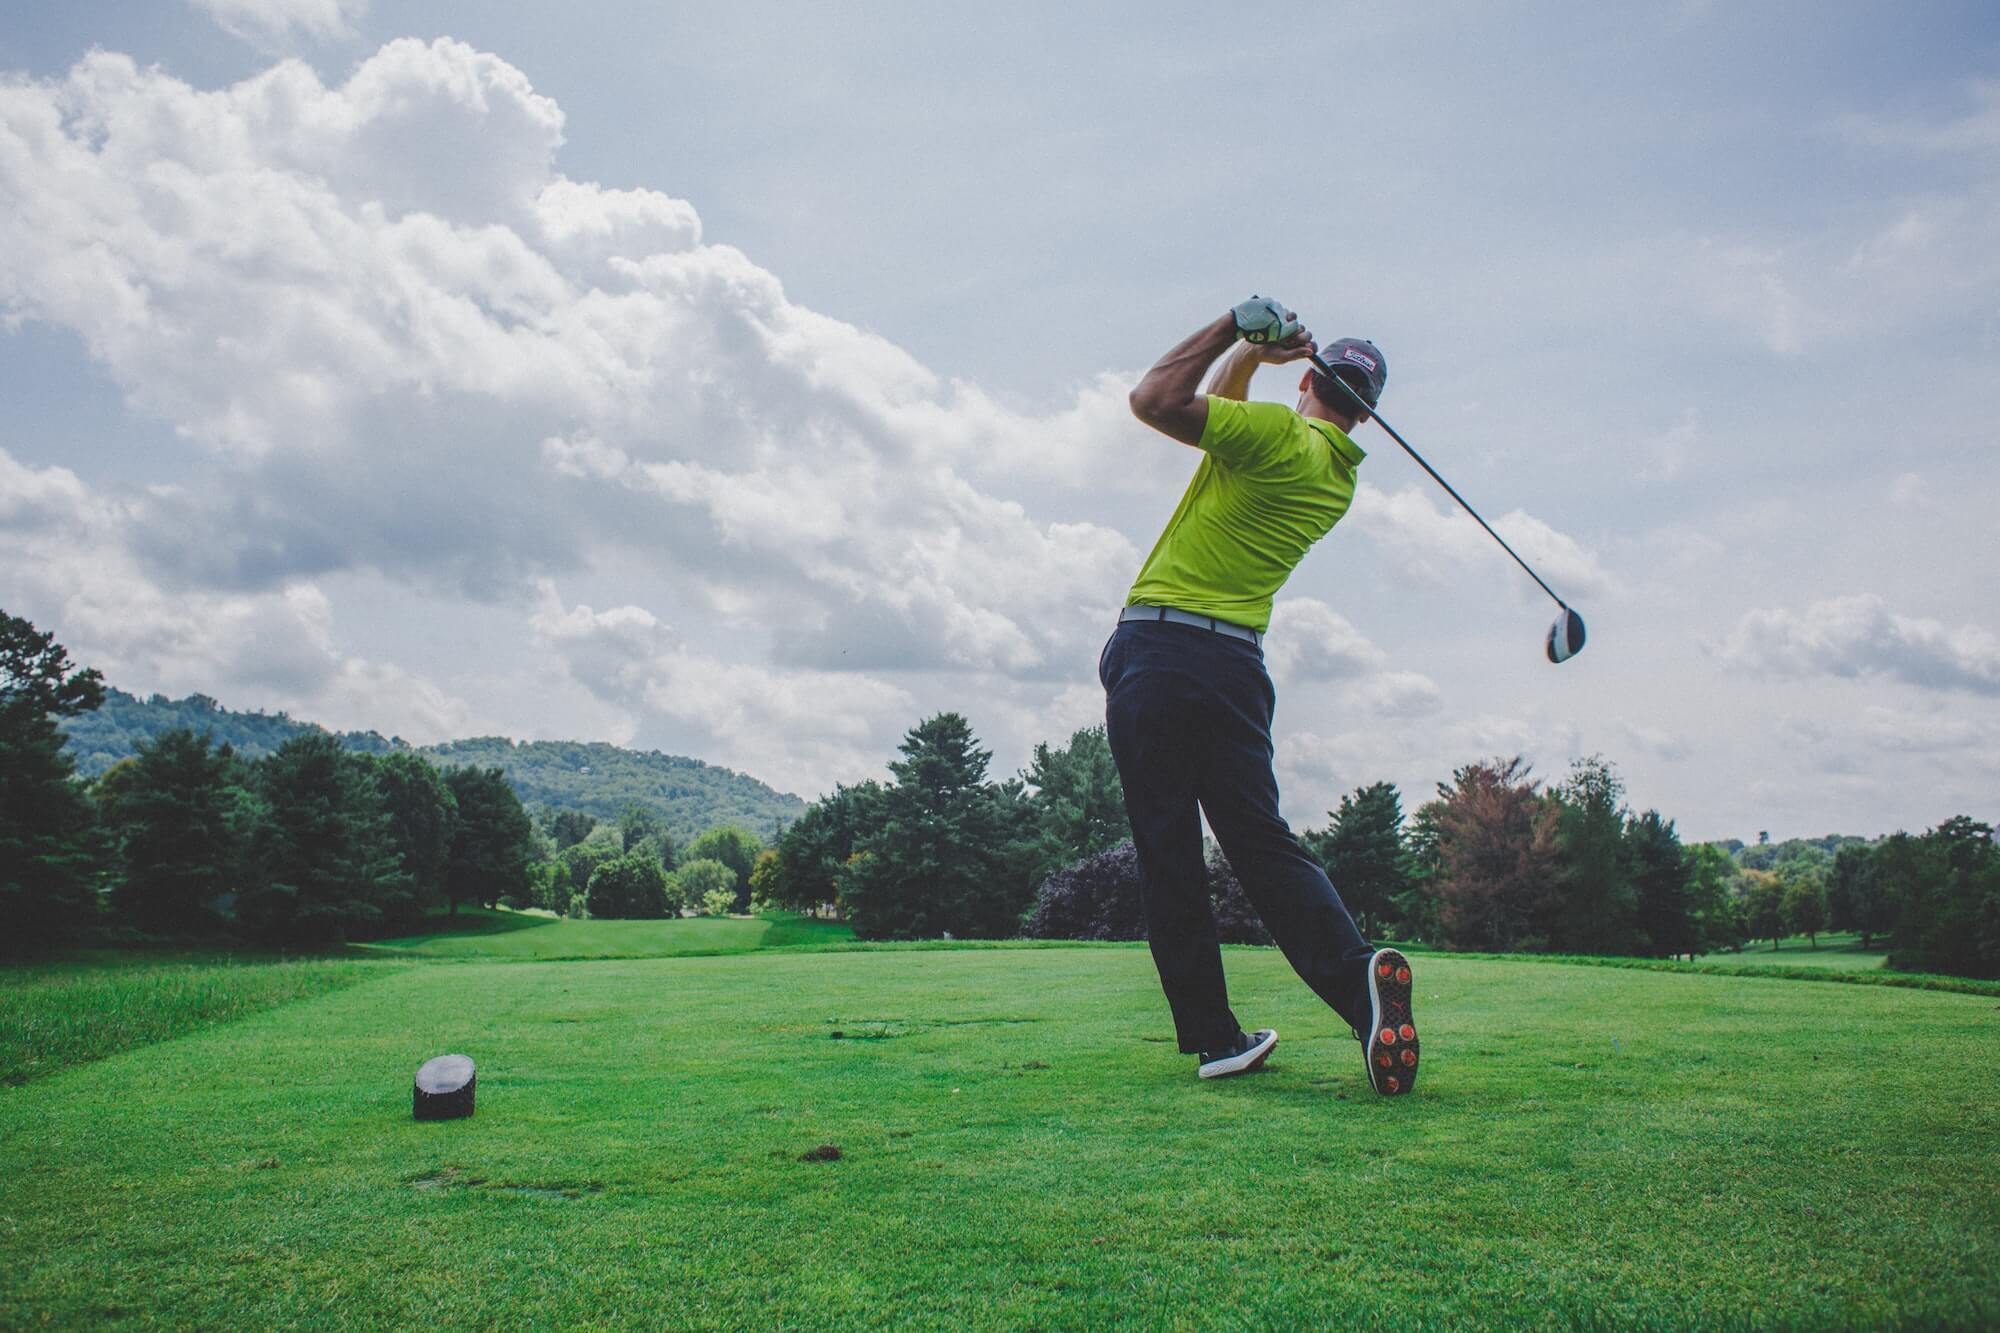 Man in lime green golf shirt, dark golf pants, and golf gloves swings golf club